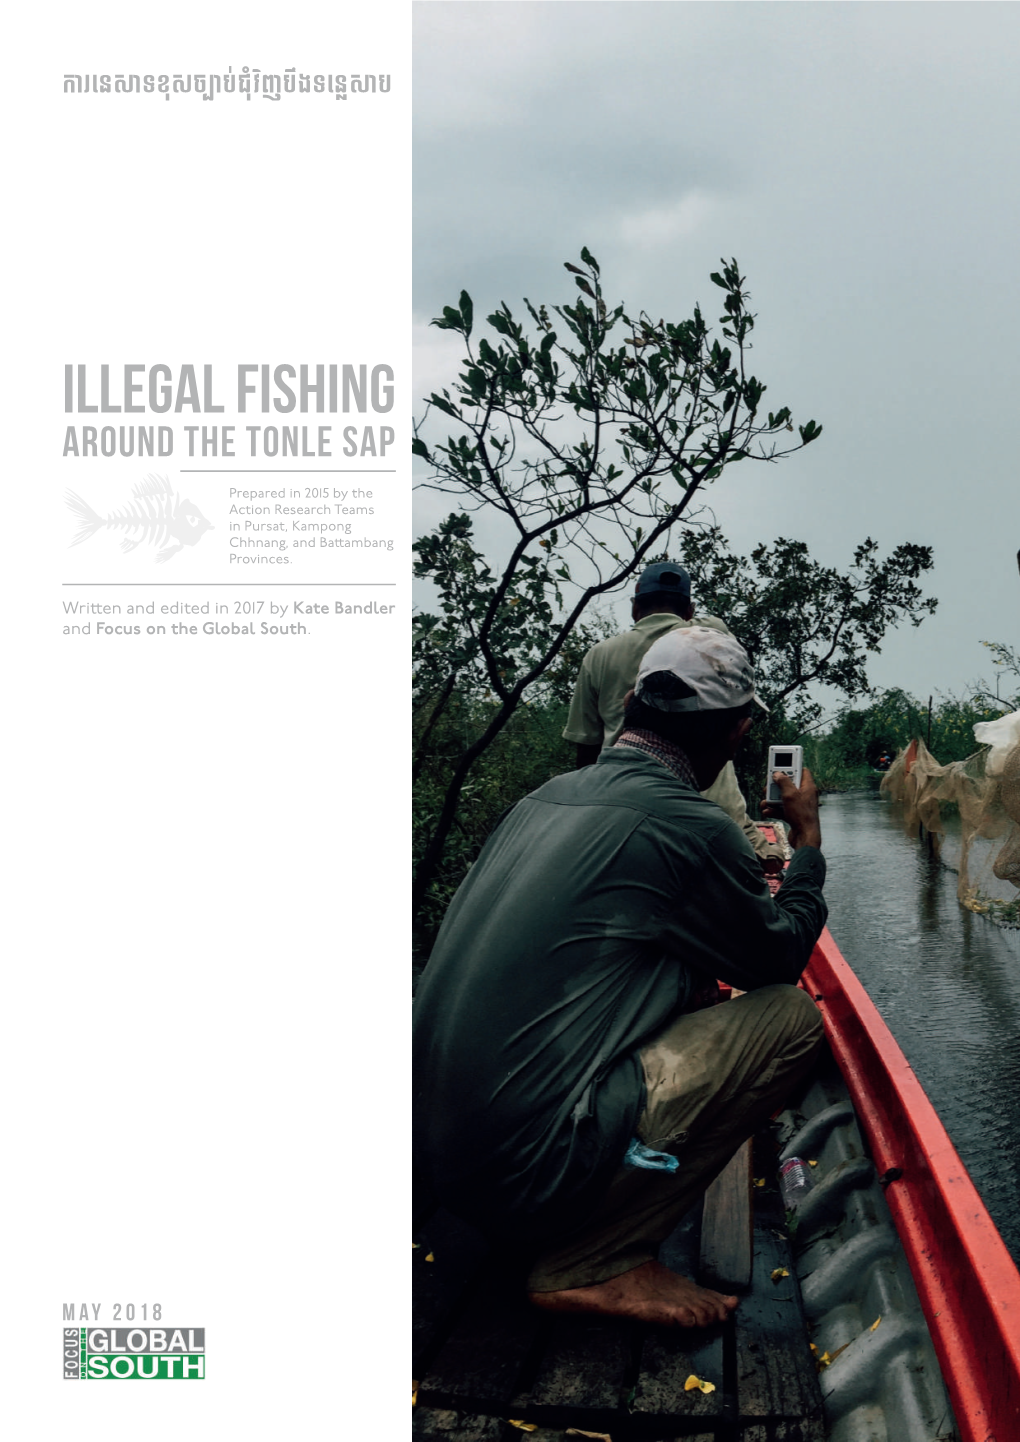 Illegal Fishing AROUND the TONLE SAP